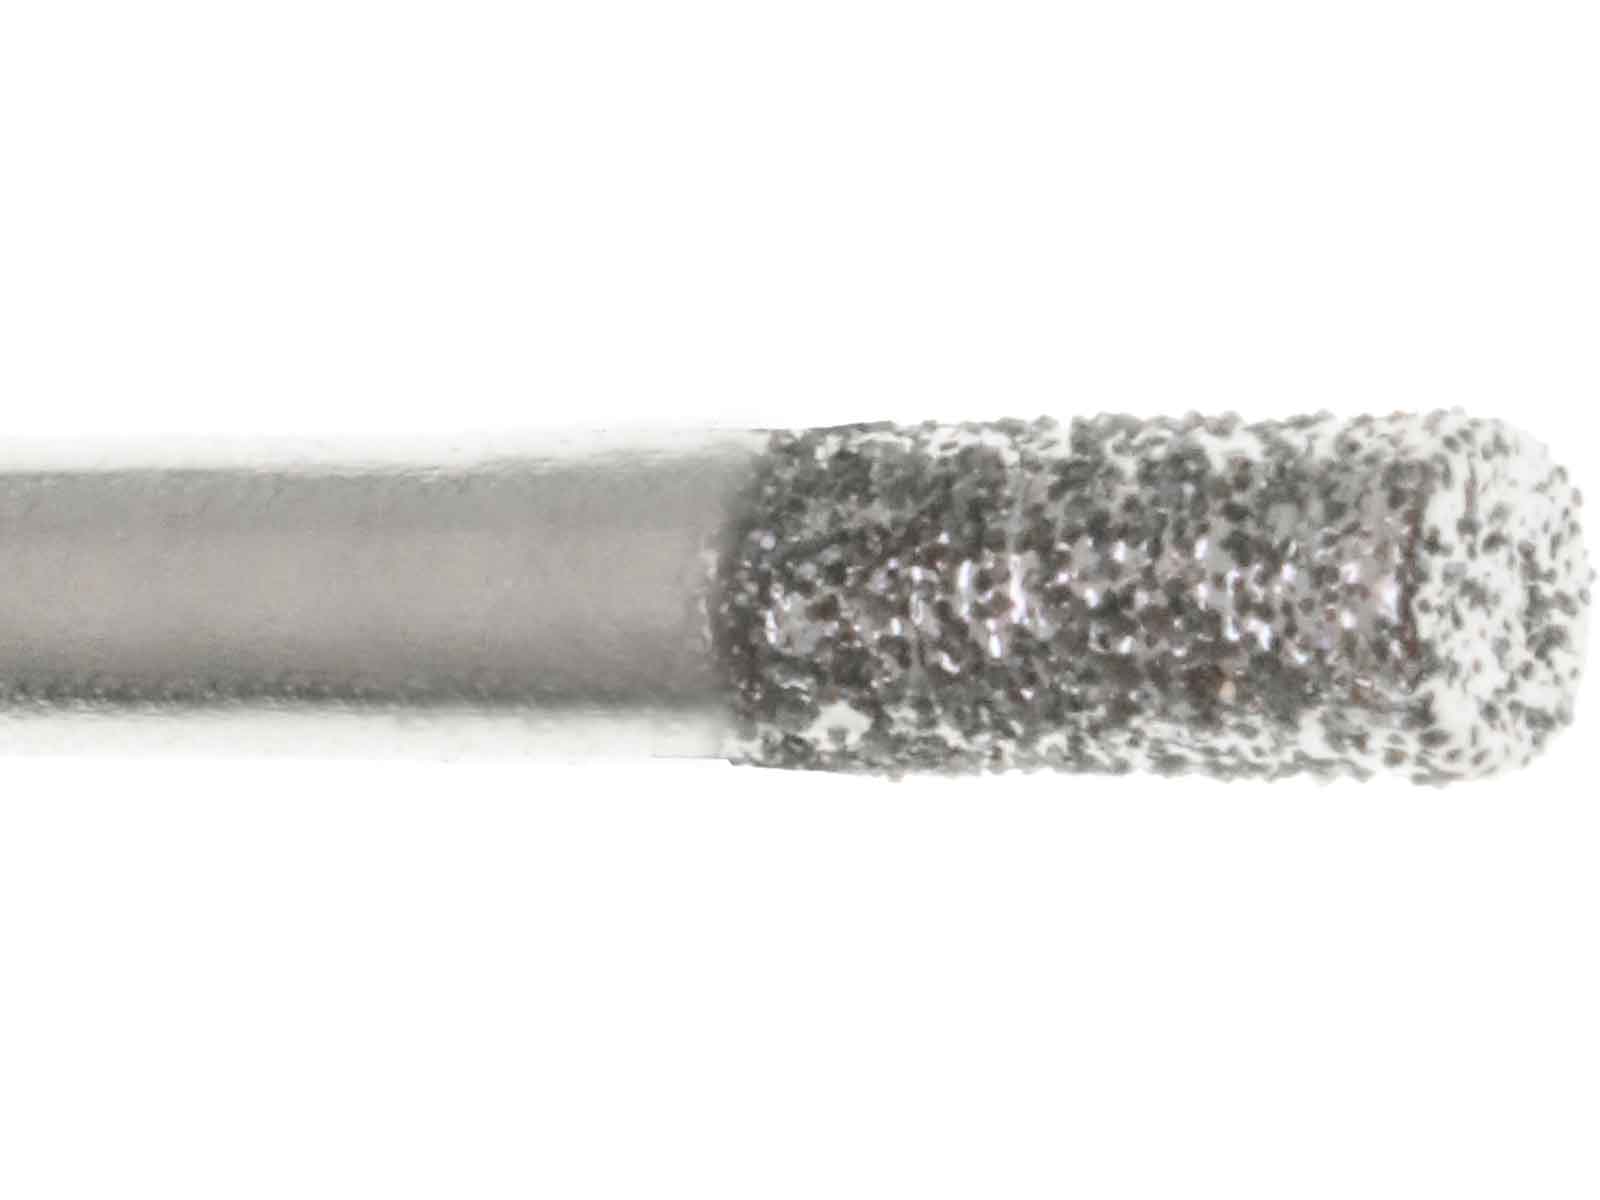 03.4mm 80 Grit Cylinder Diamond Burr - 1/8 inch shank